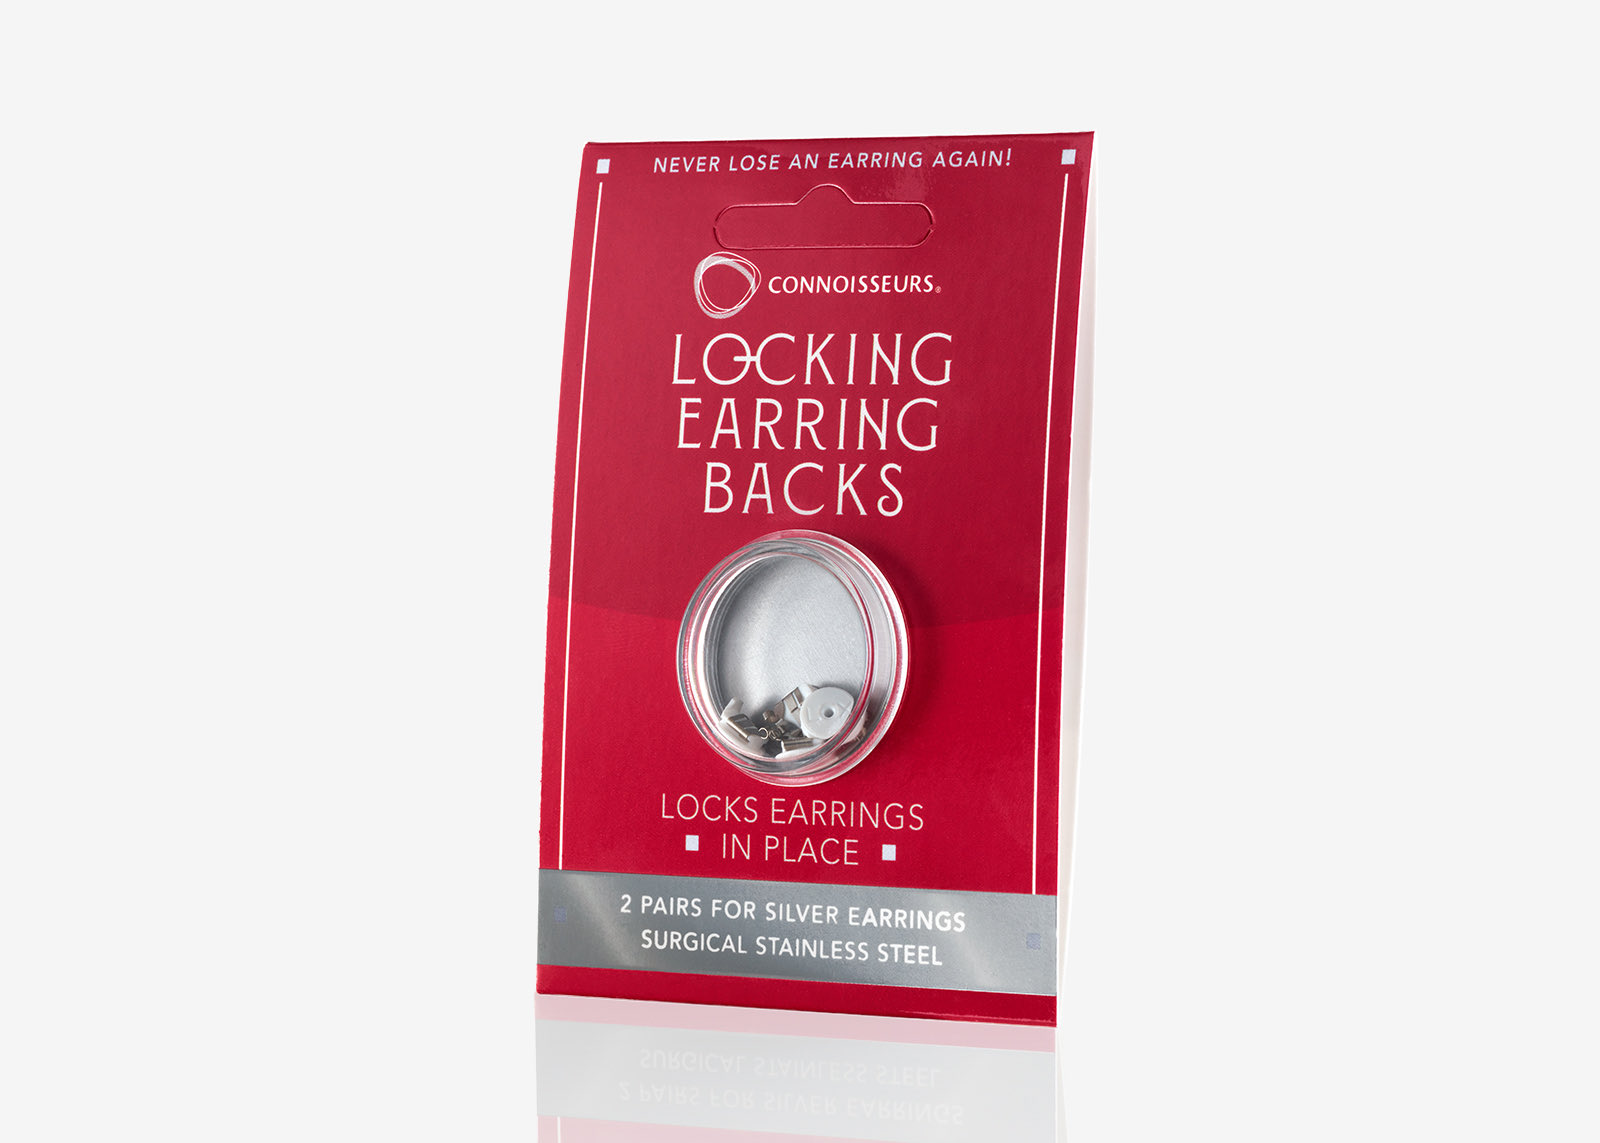 Earring-backs-locking